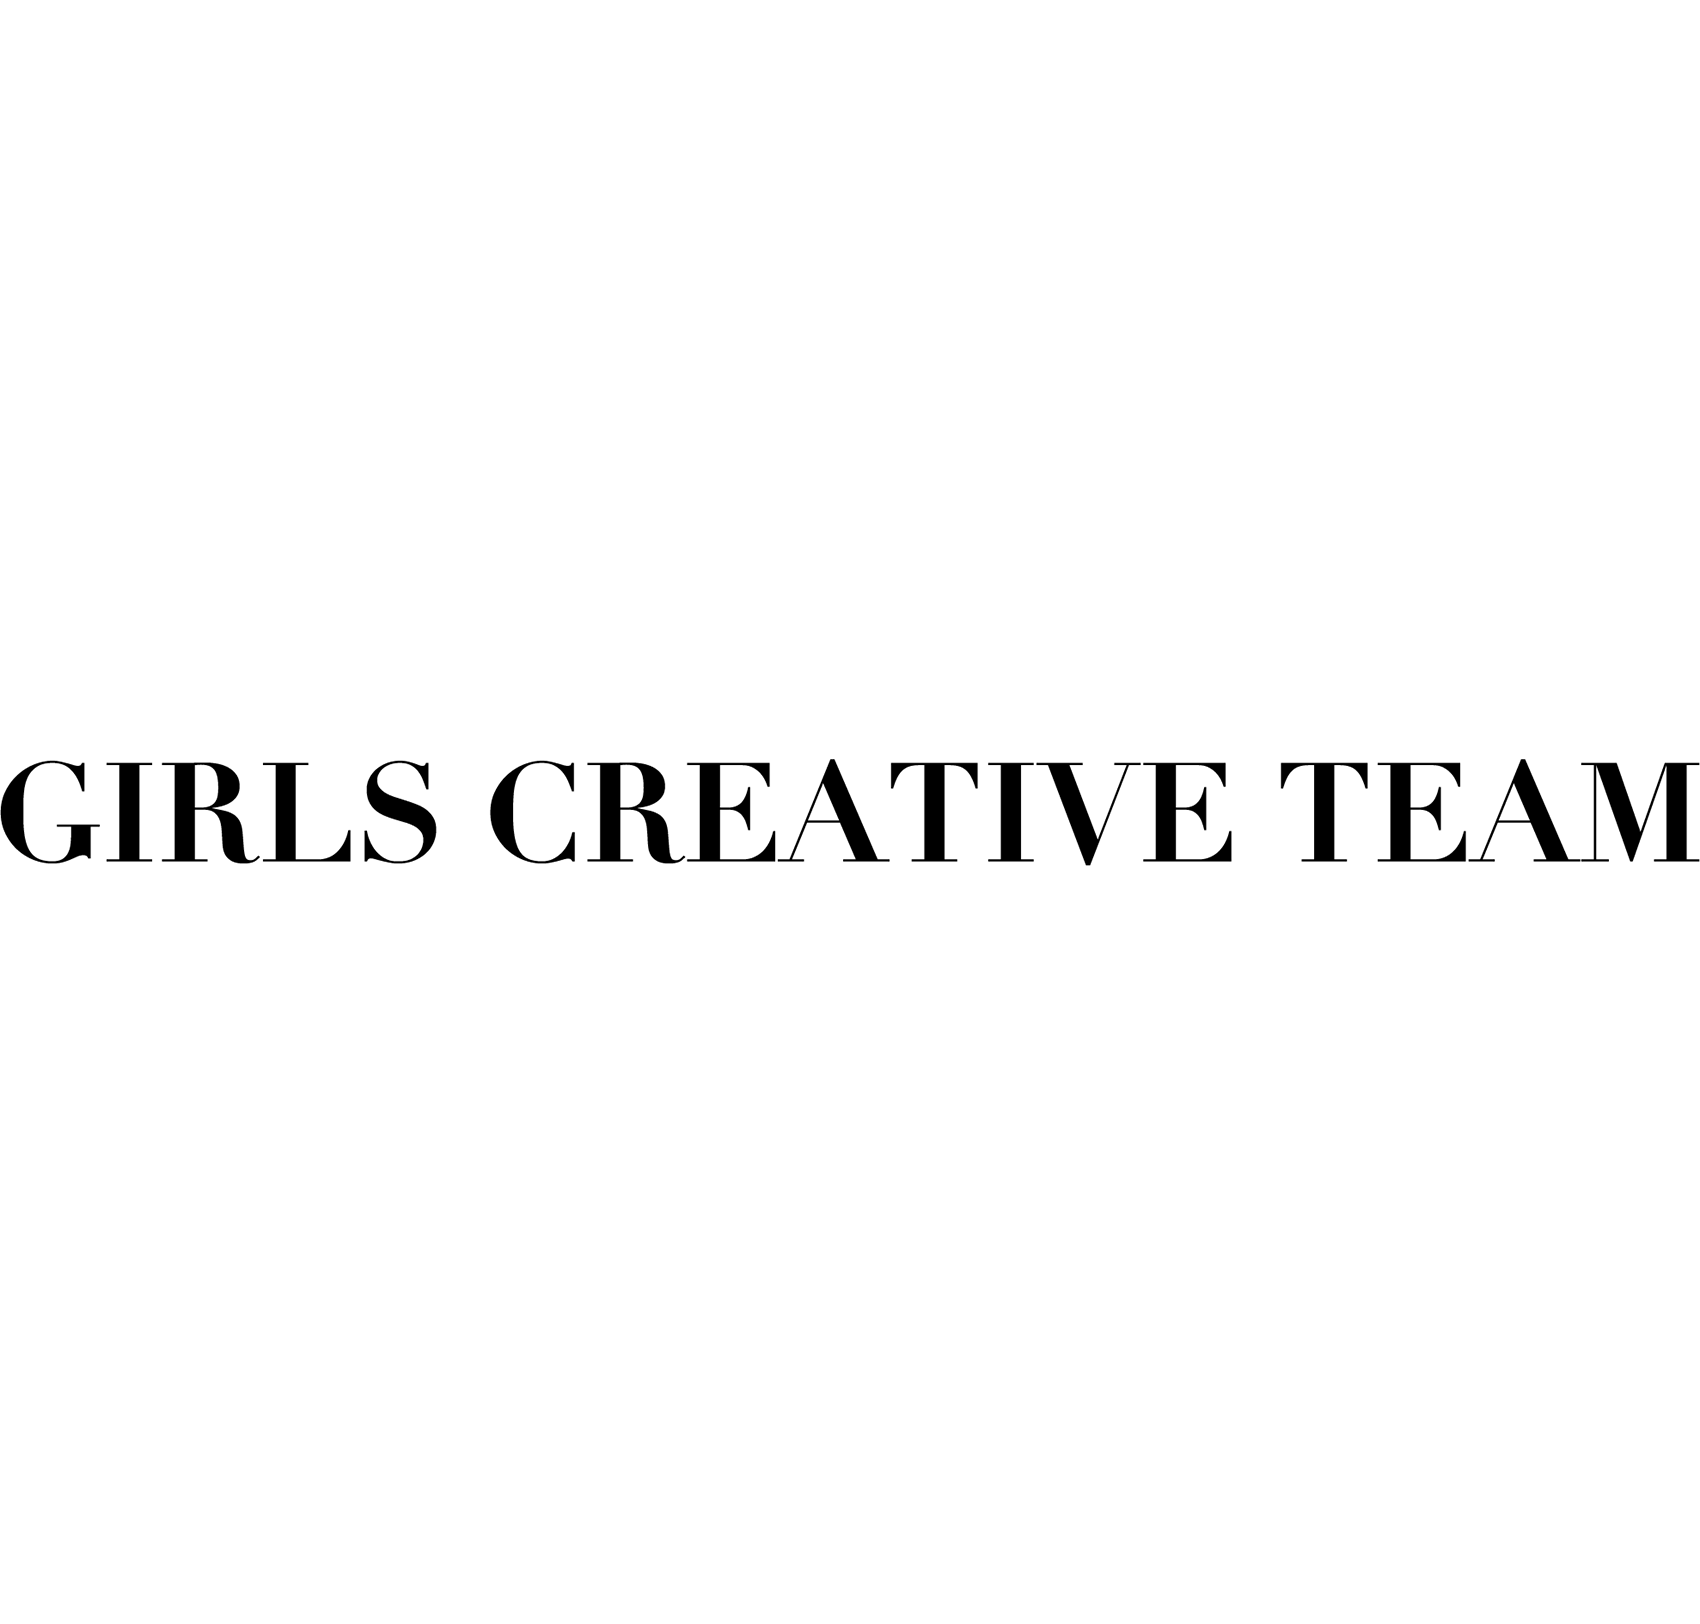 GIRLS CREATIVE TEAM